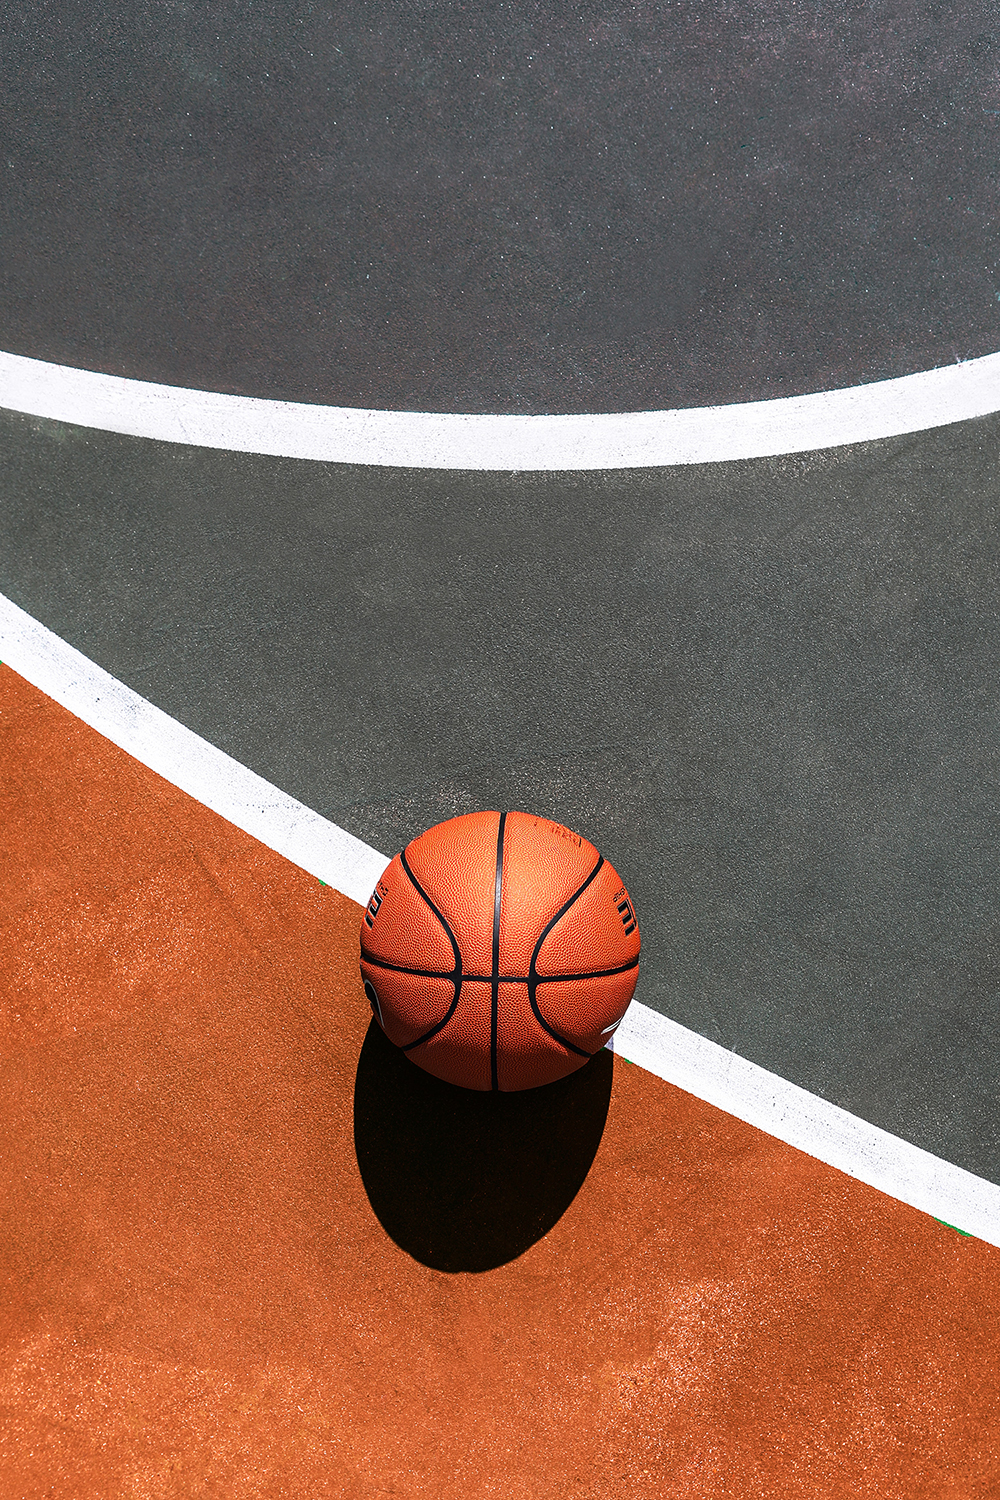 El minibasket infantil, el baloncesto a medida